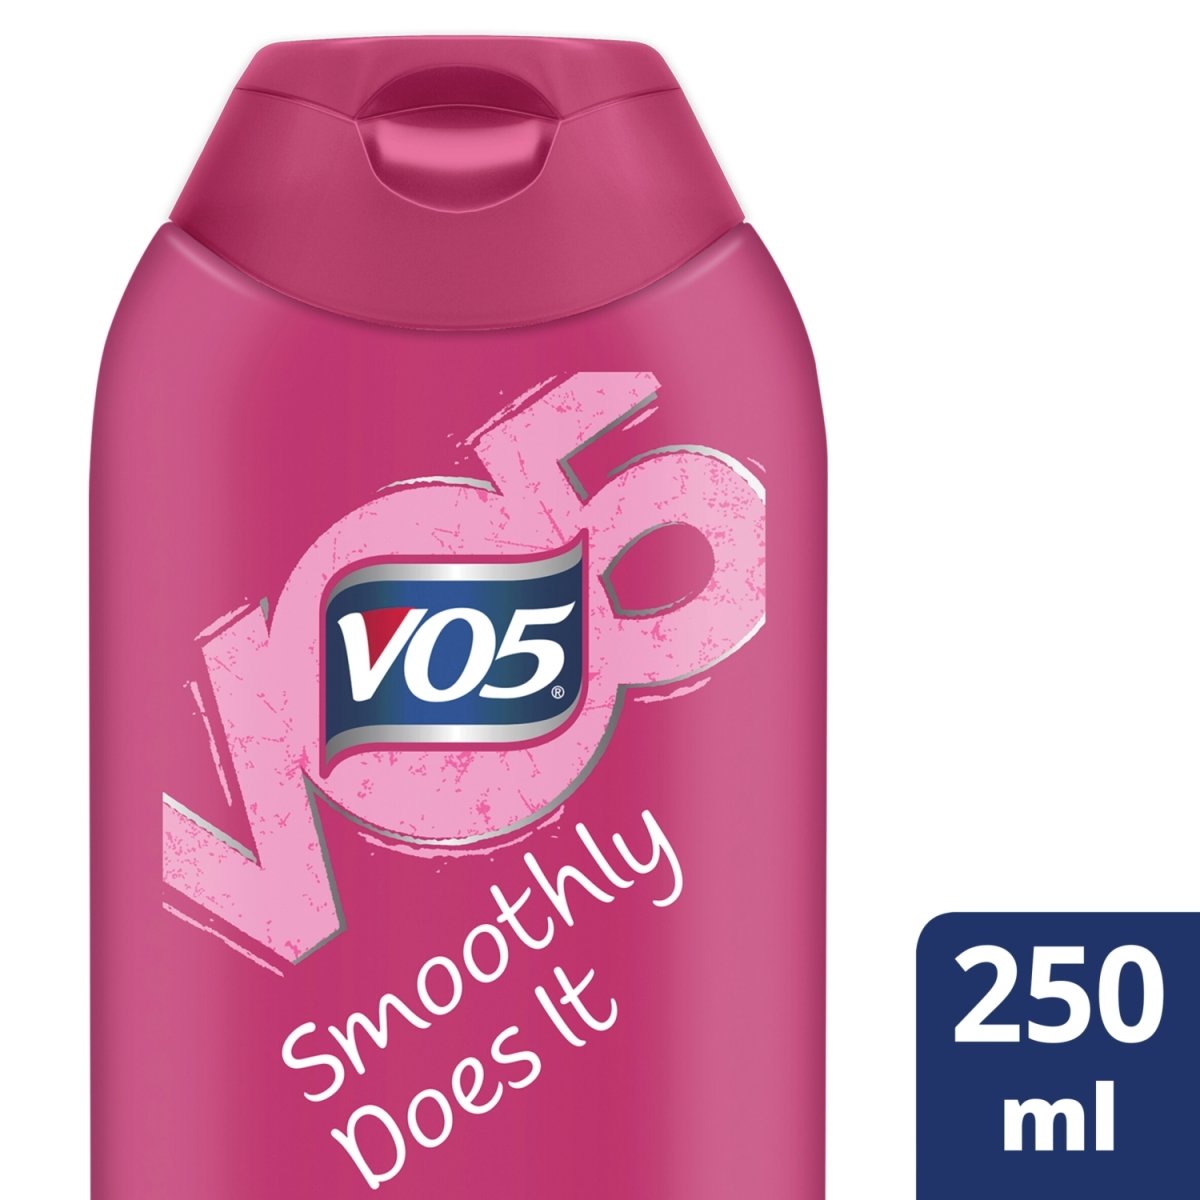 VO5 250ml Shampoo Smoothly Does It - Intamarque 8712561698528